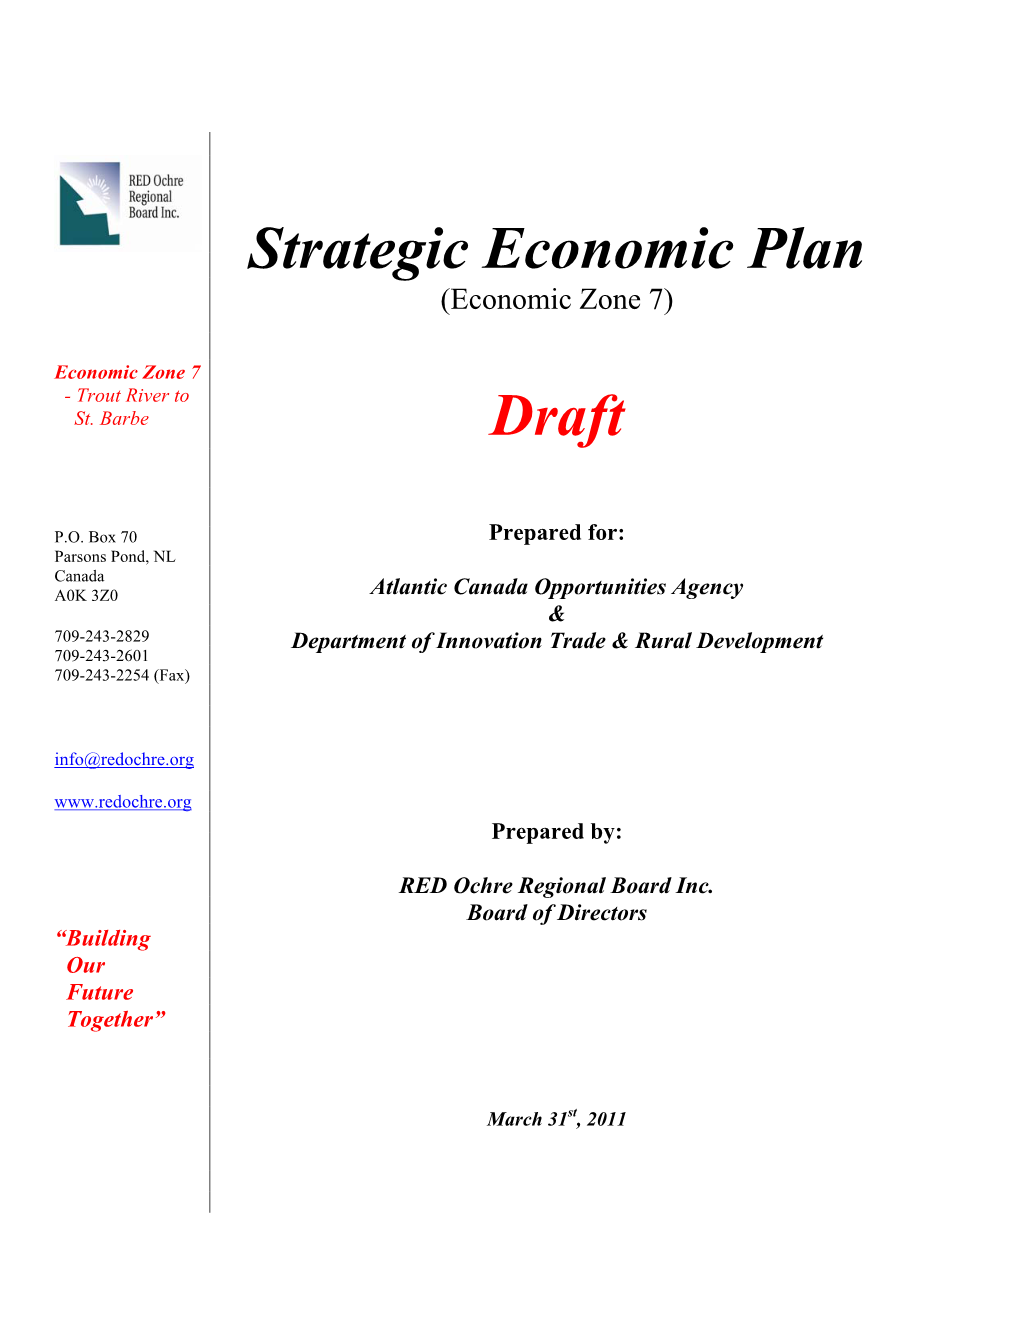 Strategic Economic Plan Draft